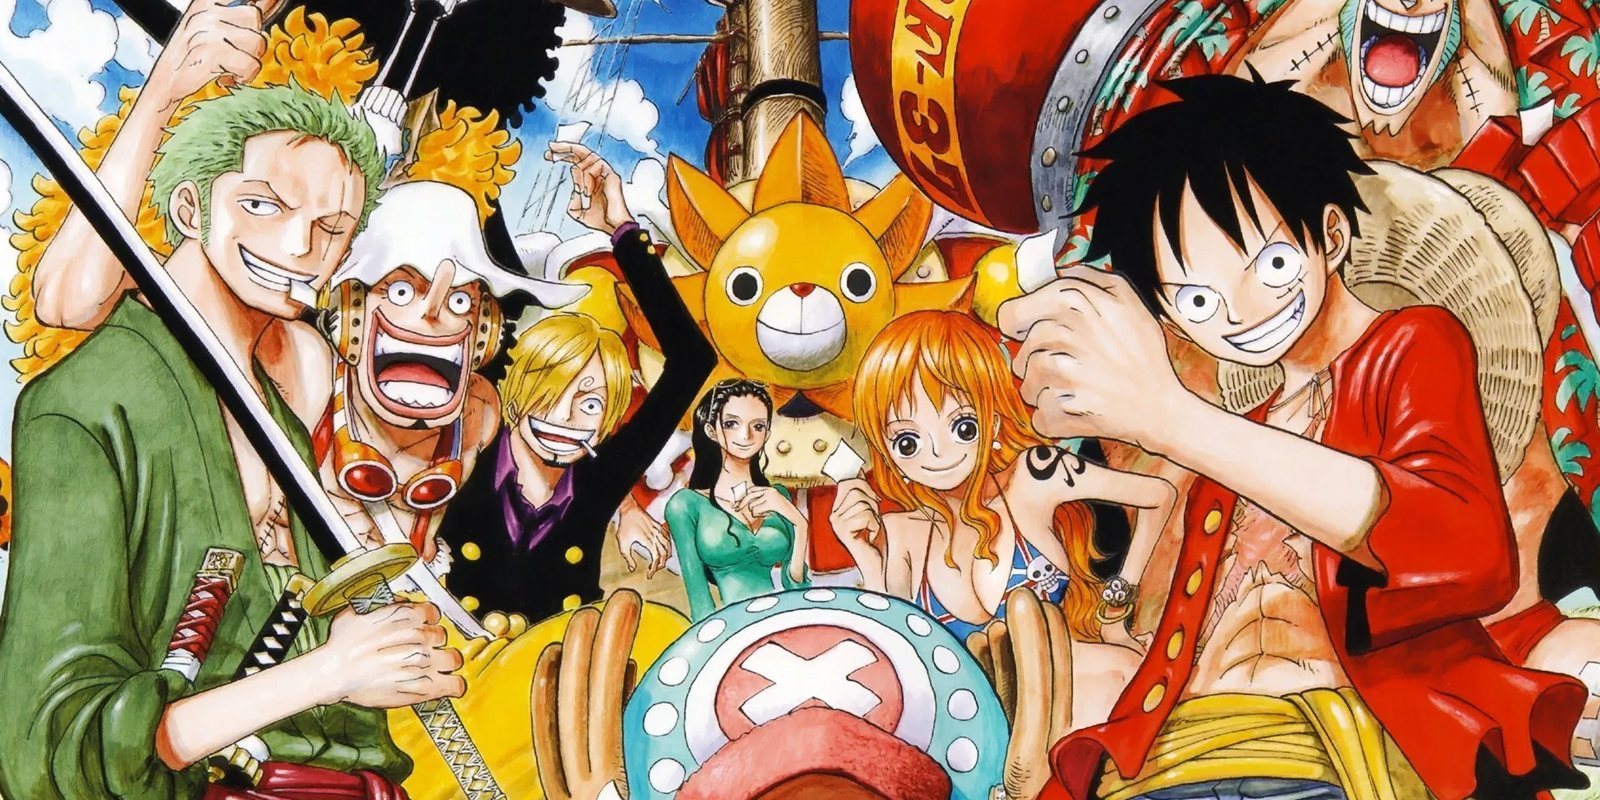 Eiichiro Oda desvela detalles de 'One Piece' que se le ocurrieron en el último minuto